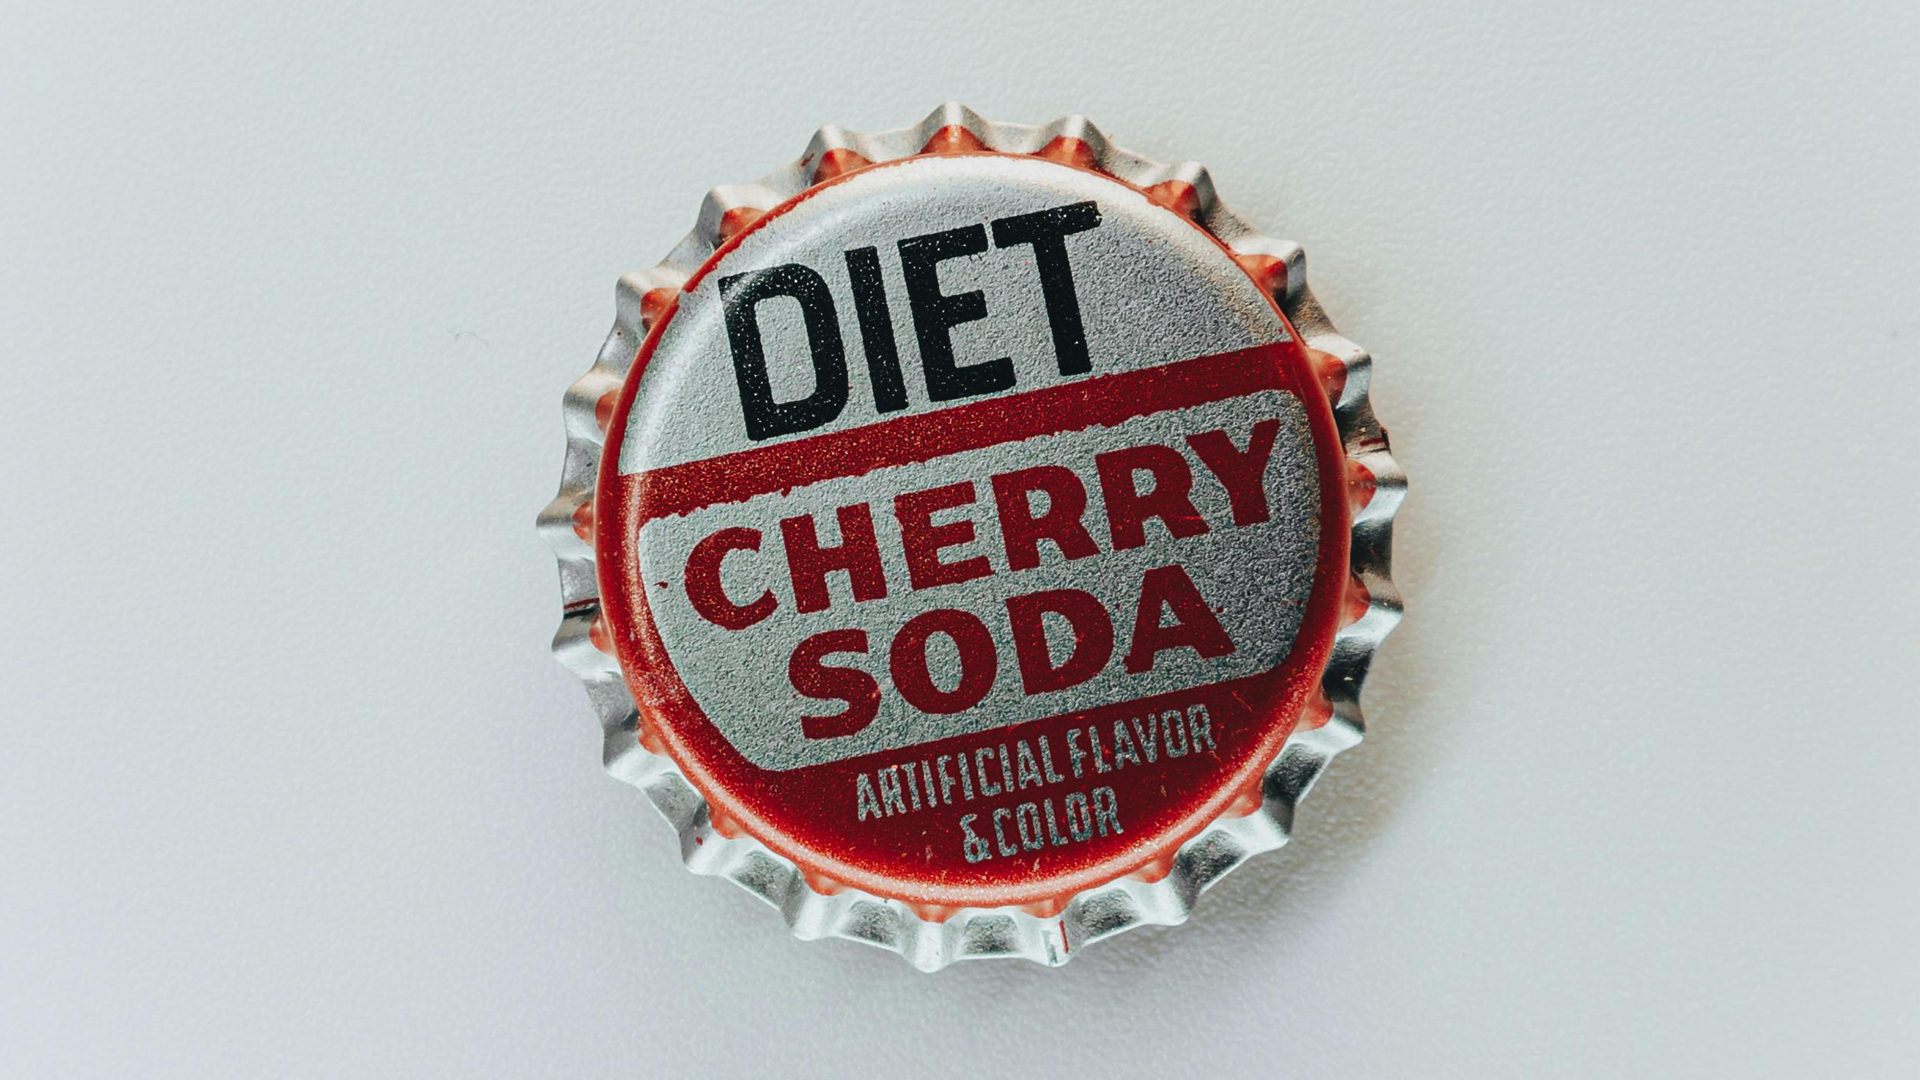 Diet cherry soda bottle cap